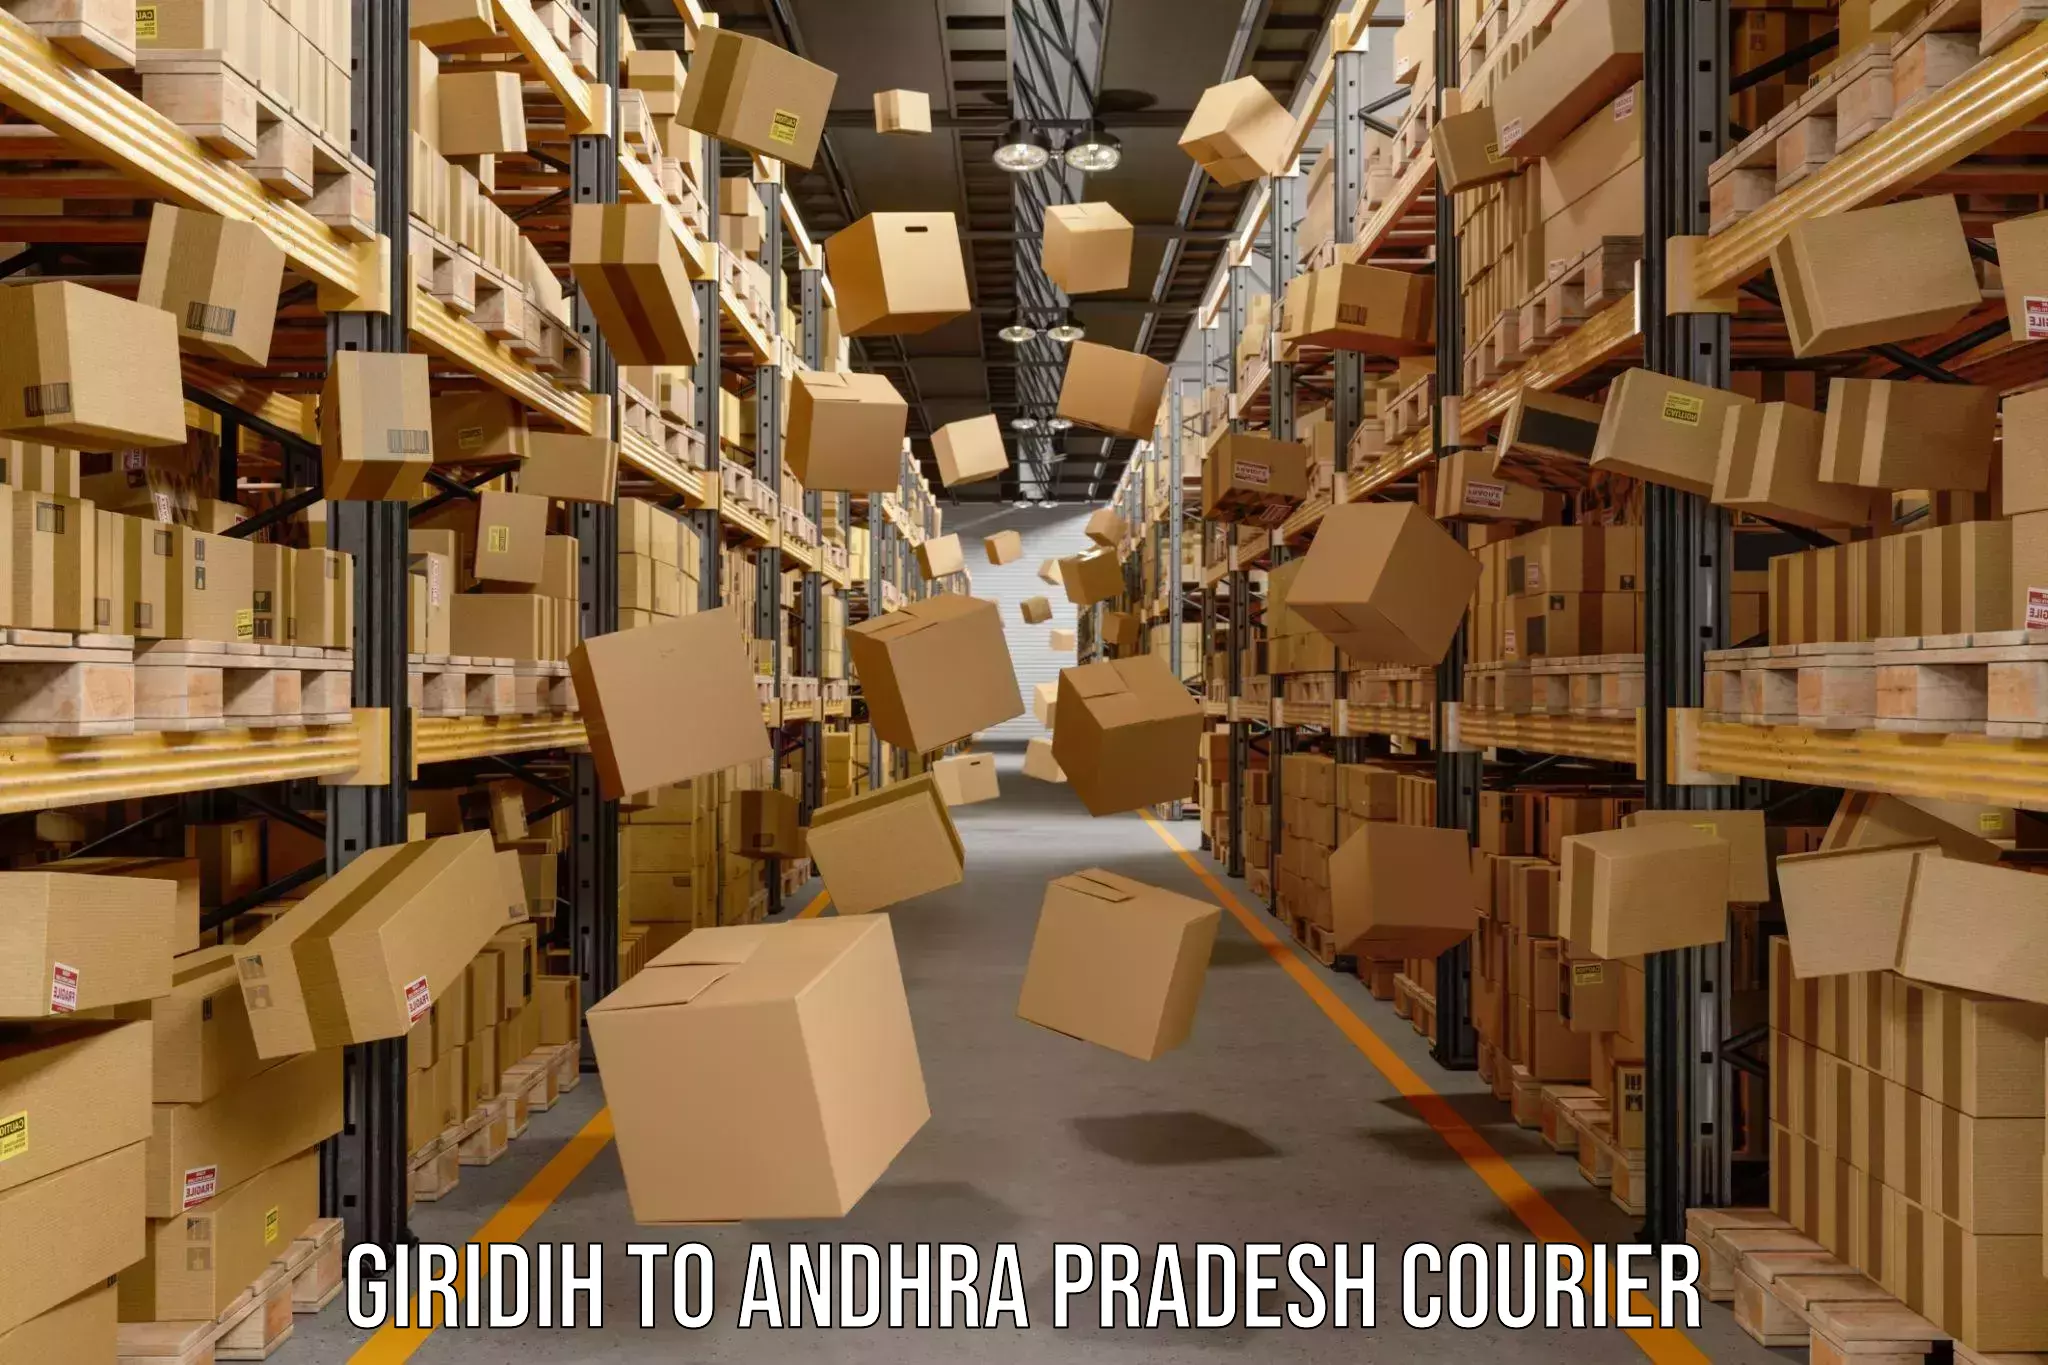 Courier service partnerships Giridih to Andhra Pradesh